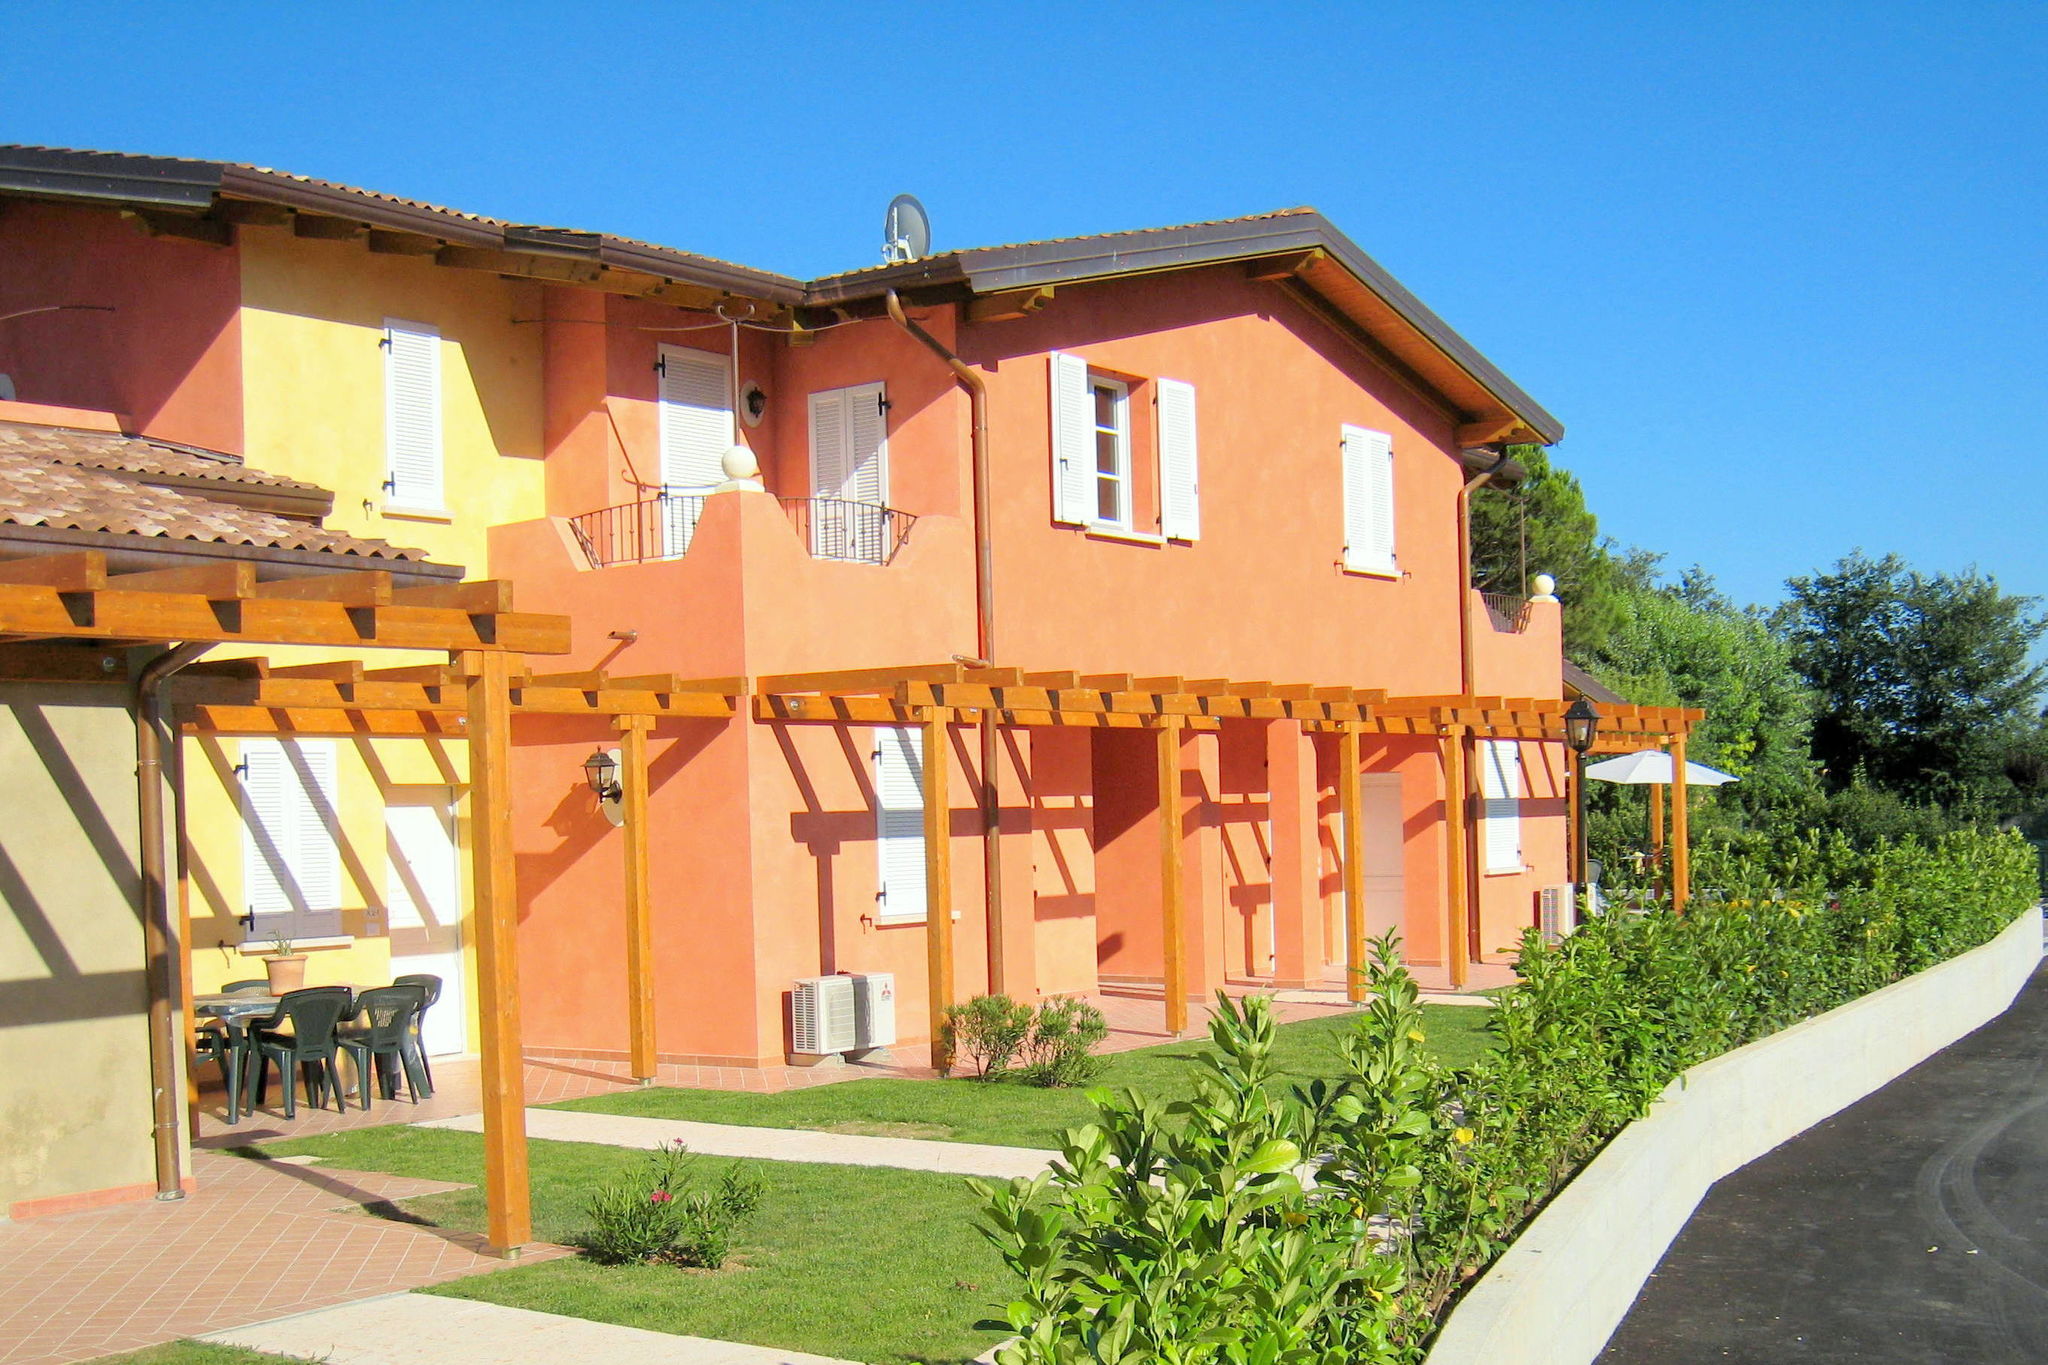 Attractive residence on Lake Garda, close to Manerba